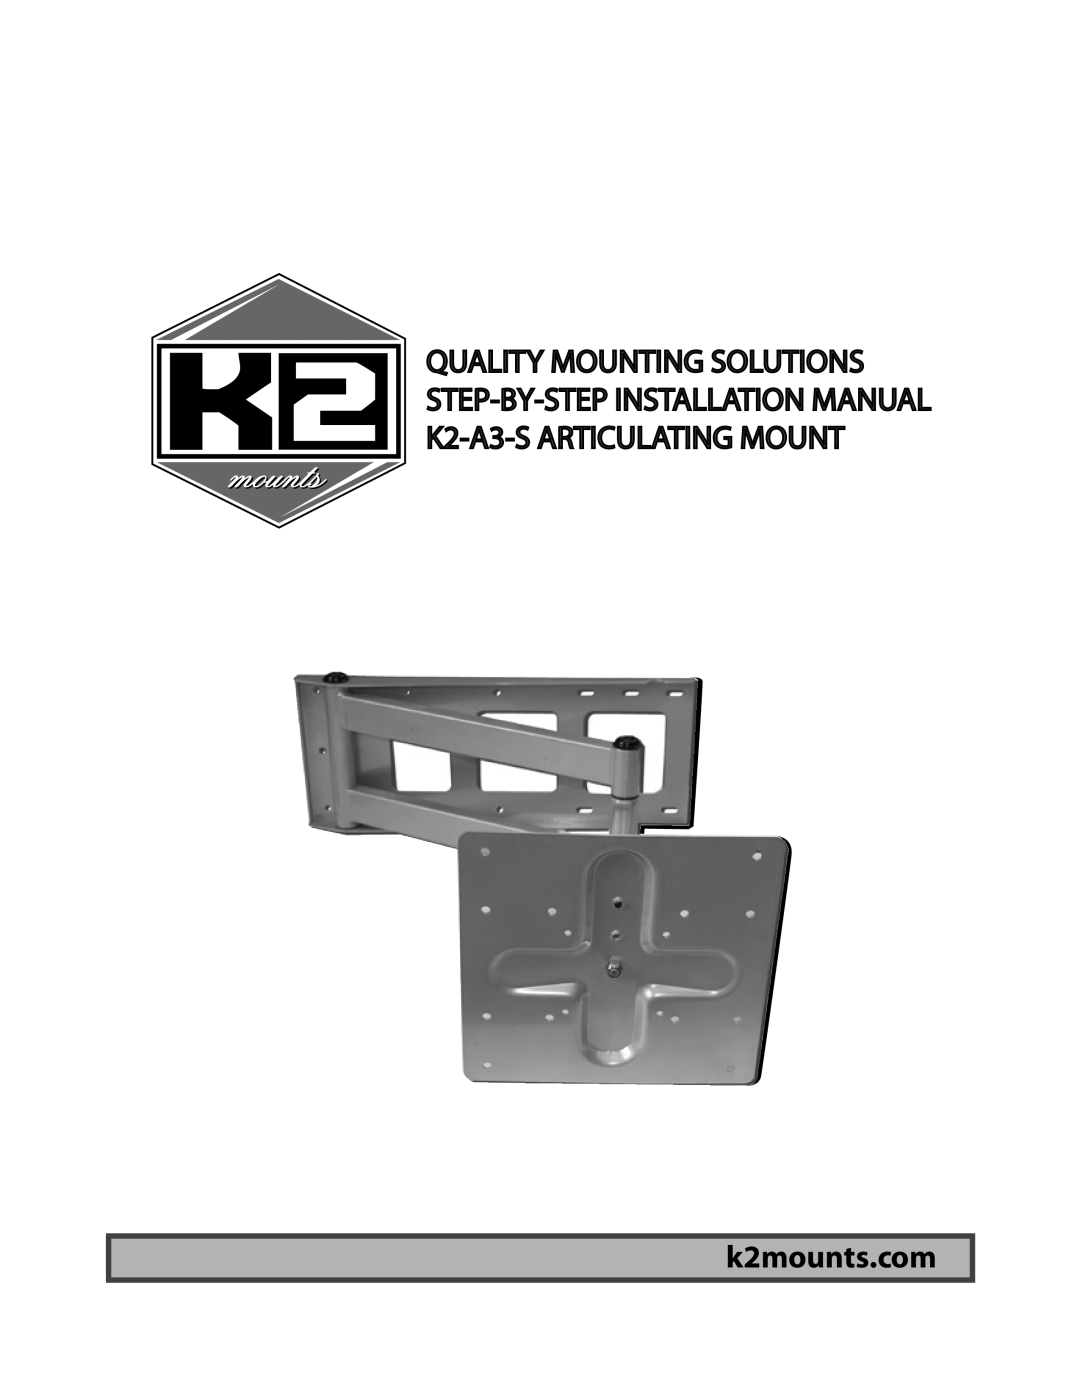 K2 Mounts K2-A3-S manual k2mounts.com 